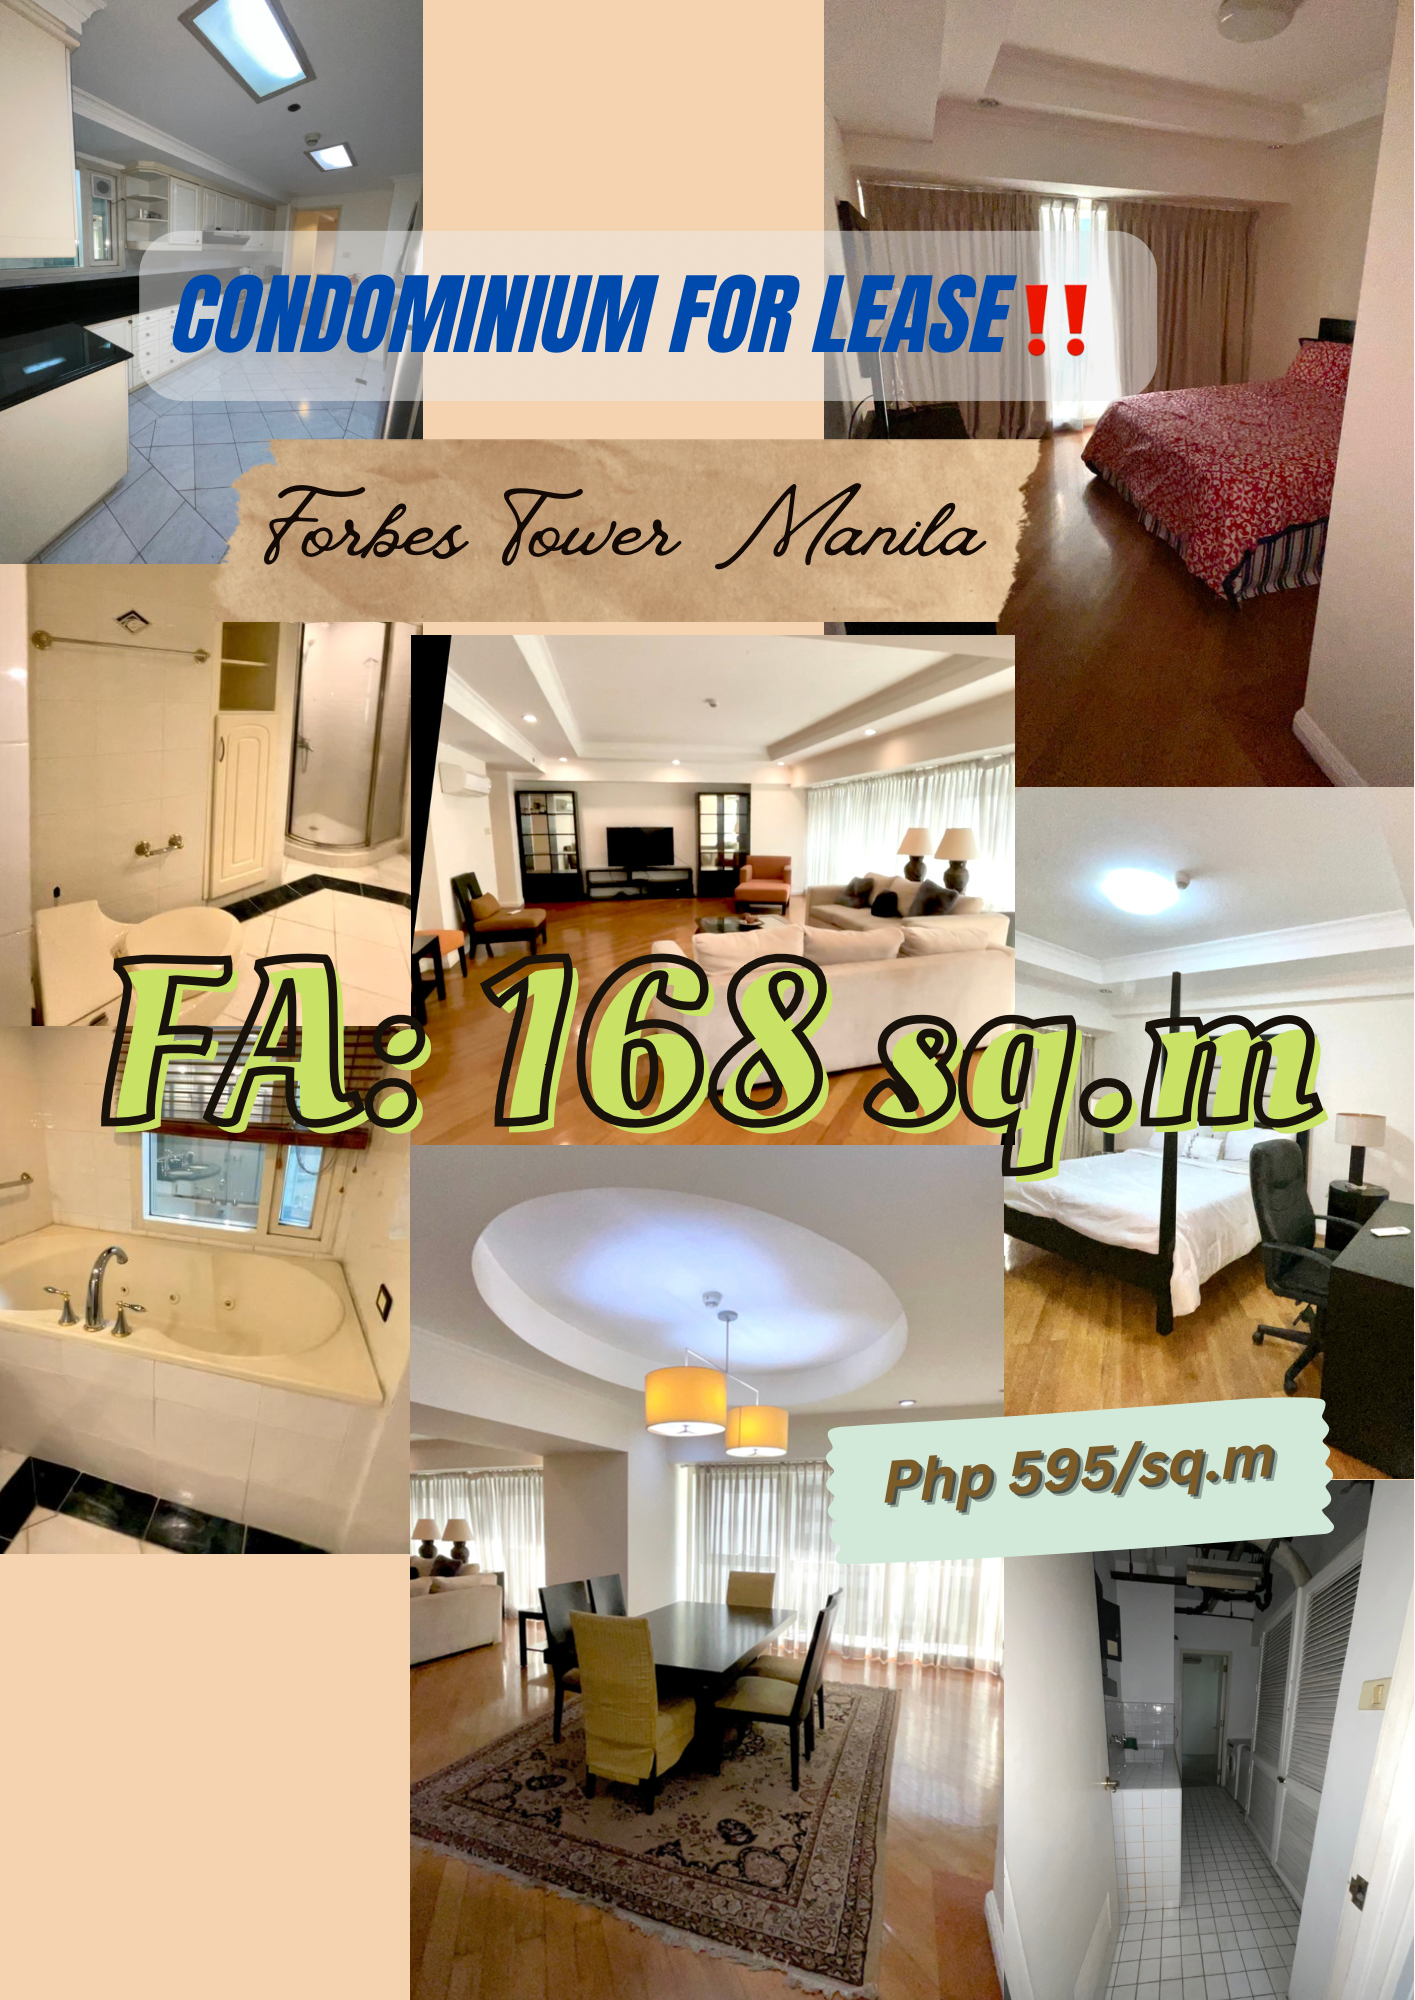 Condominium for Lease in Valero Street, Forbes Tower Manila‼️